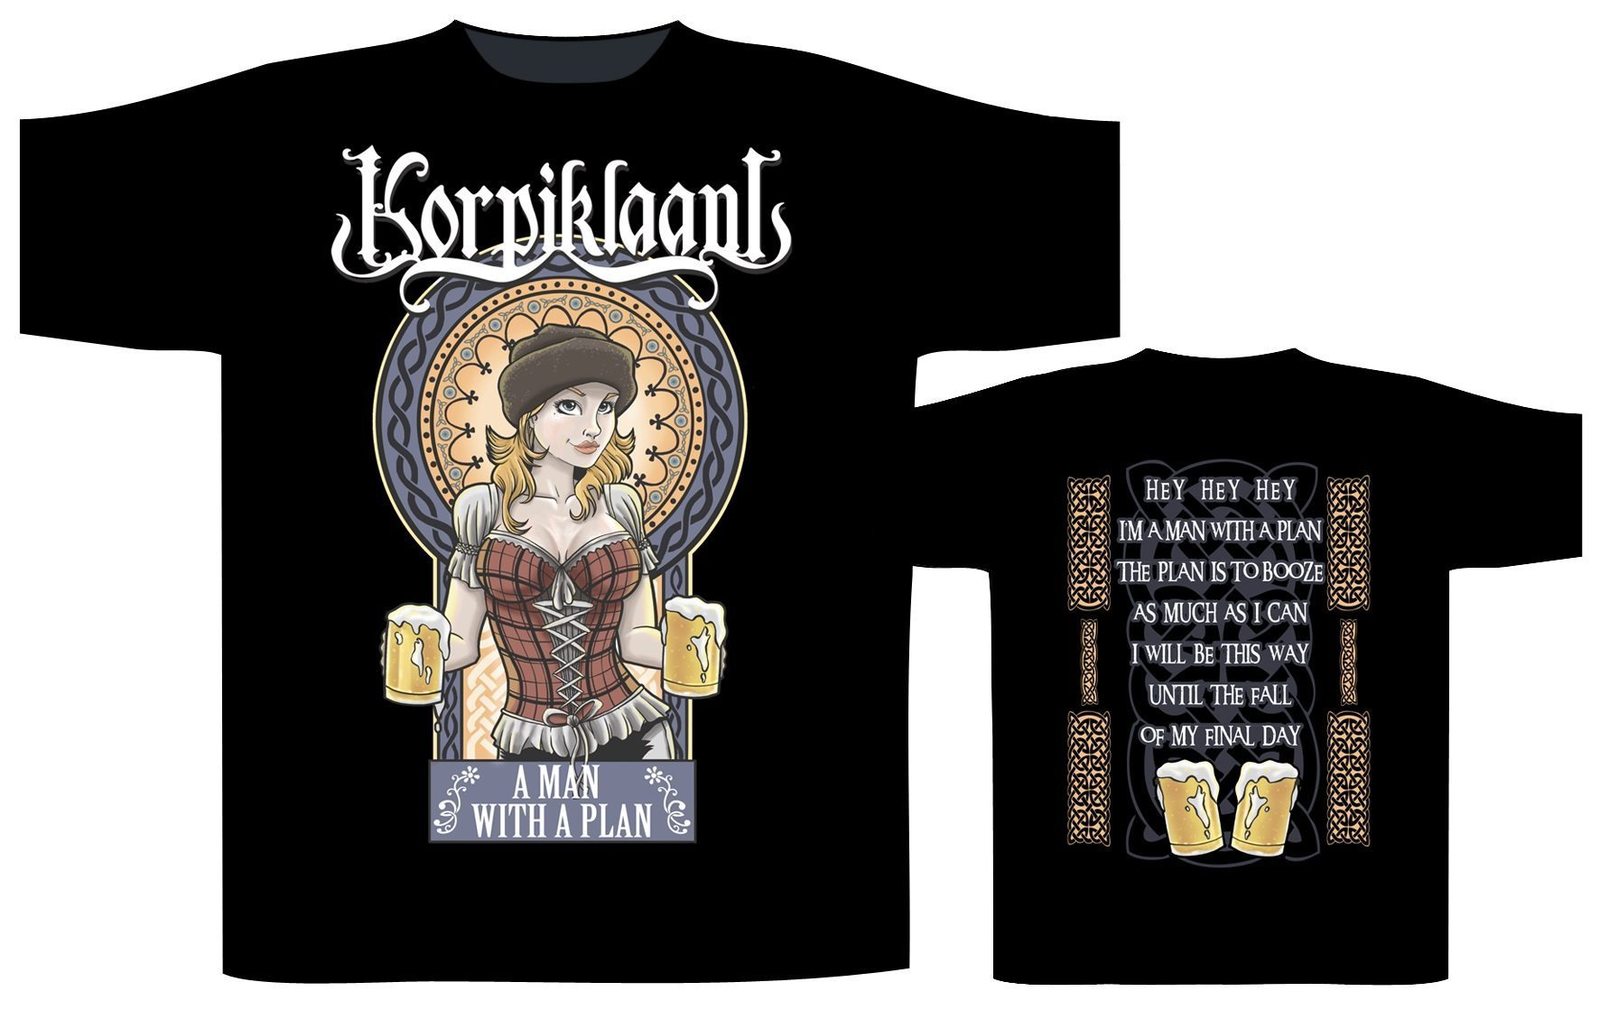 Psychonaut 4 Band Long Sleeve T-Shirt, Psychonaut 4 Alcoholism